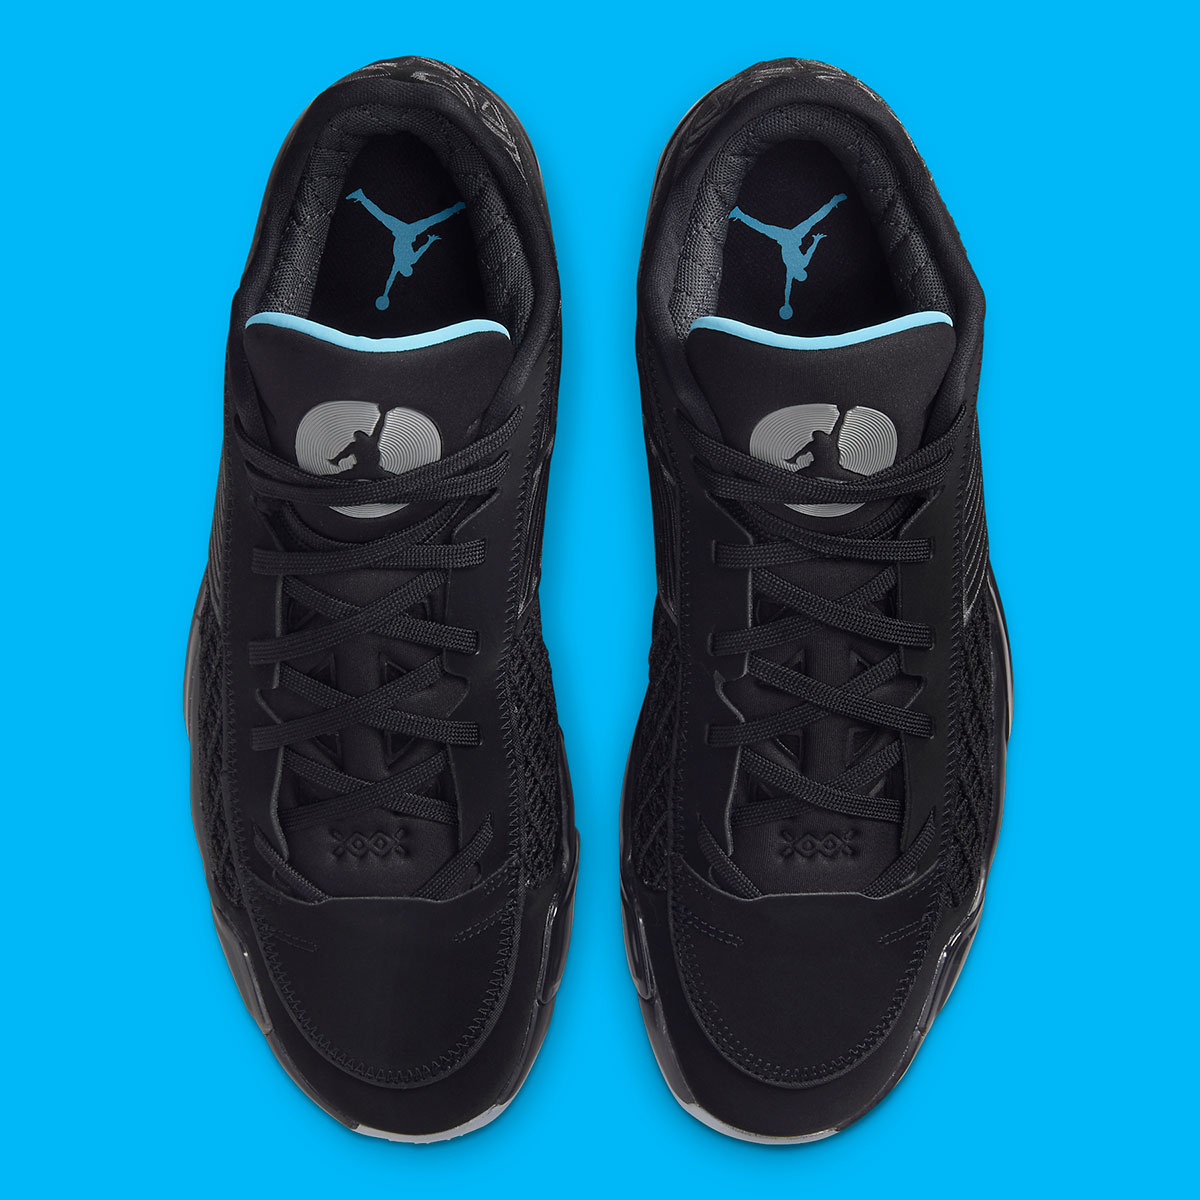 Atmos x The Air Jordan Puppy 1 Flyease Reaches For New Beginnings x Nike Low Black University Blue Fd2326 004 3